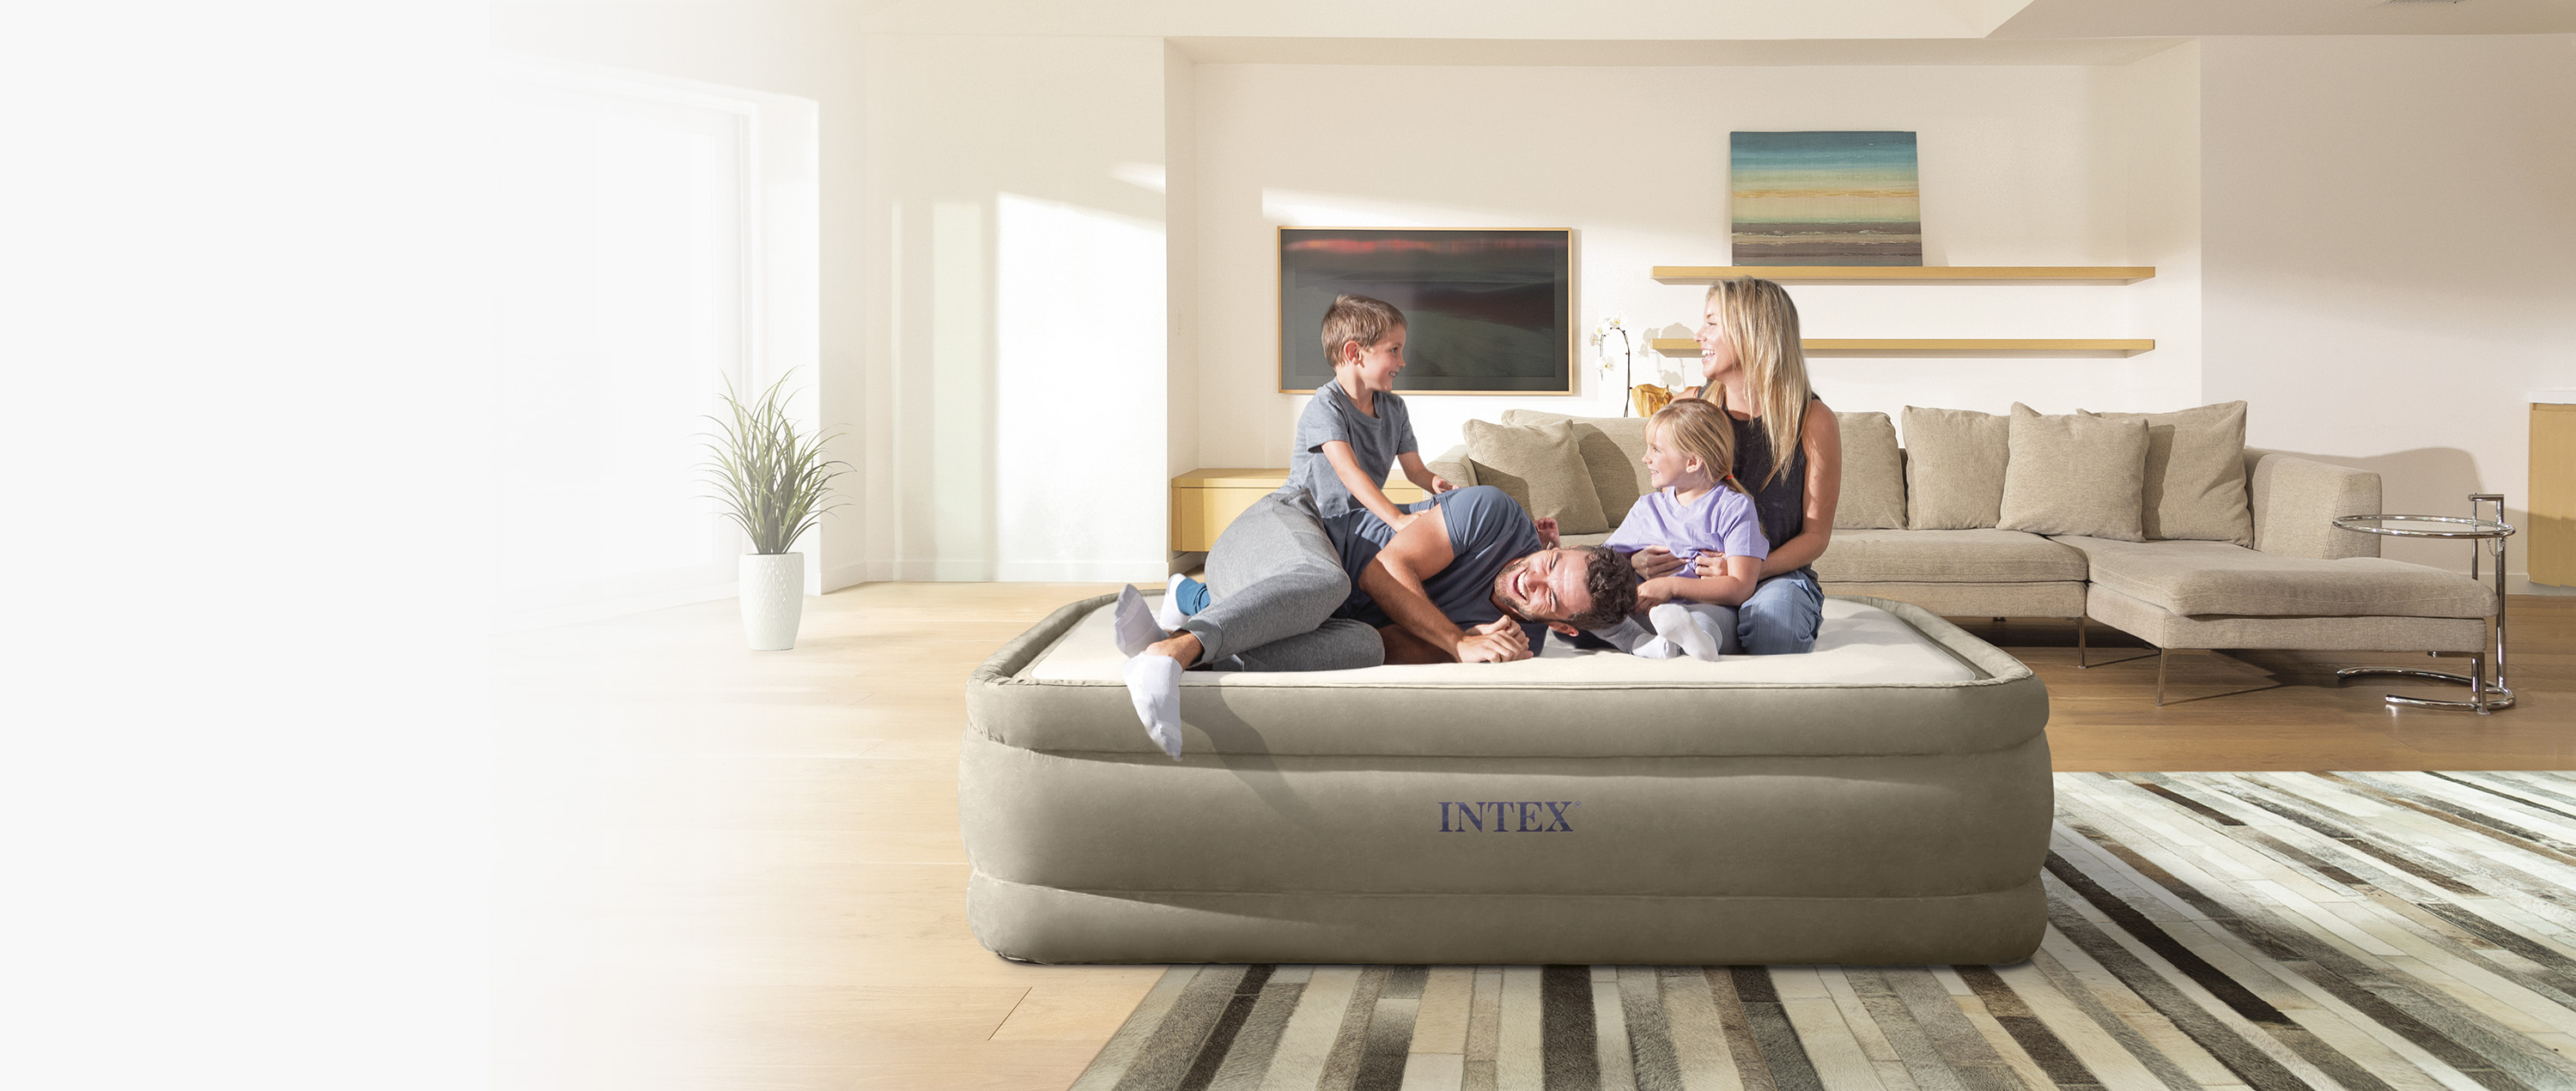 Найди свой комфорт вместе с INTEX!